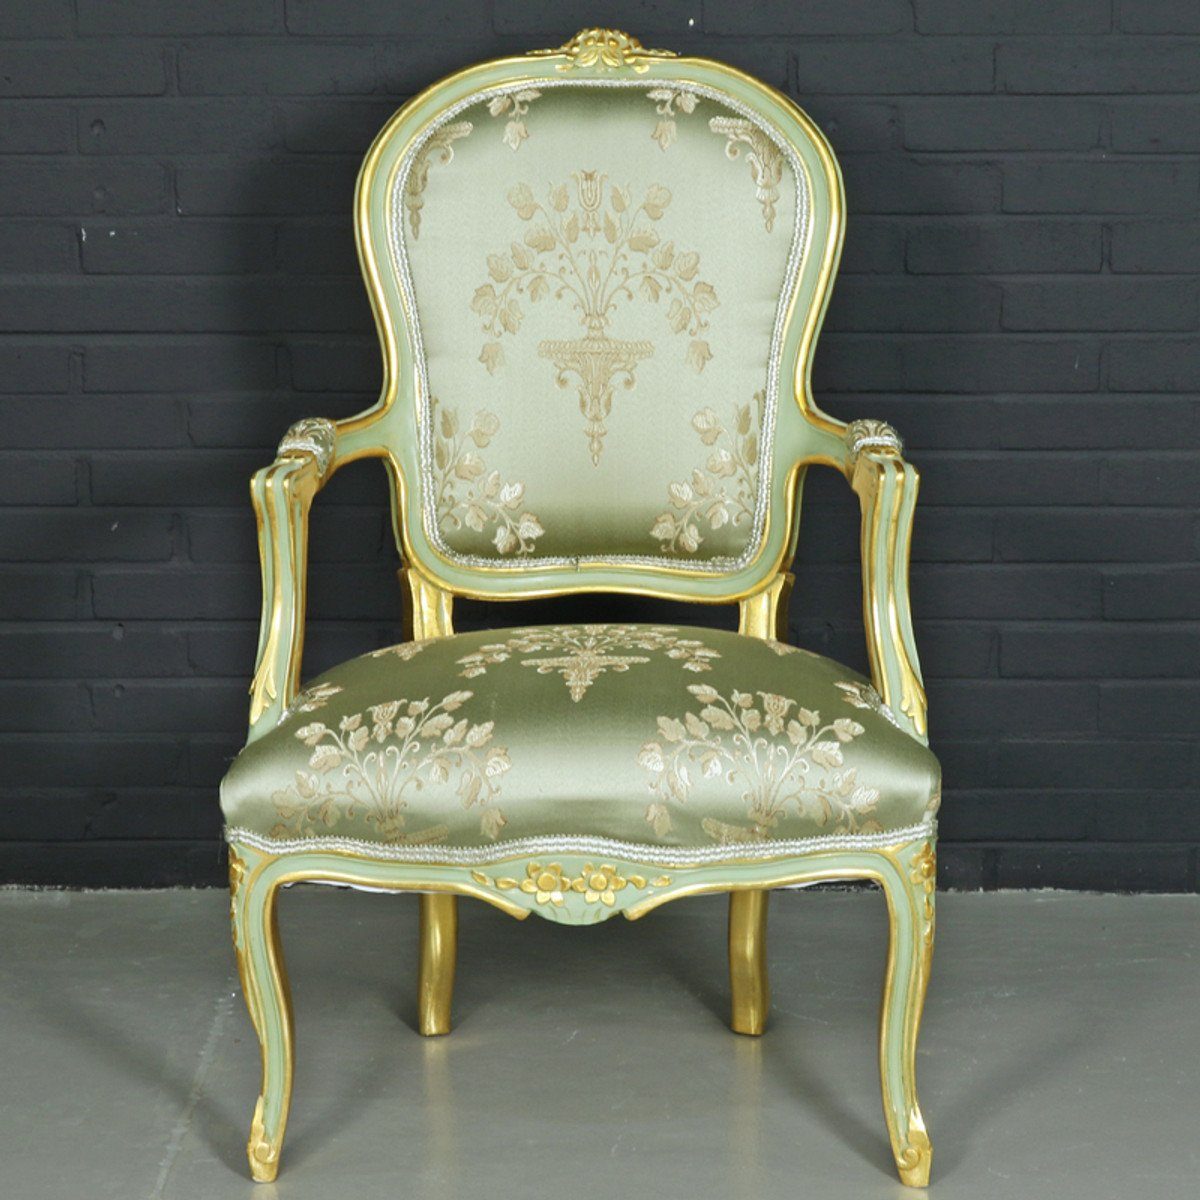 Stuhl Stuhl Salon Mod1 Armlehnen Casa "Medaillon" Gold Hellgrün - Besucherstuhl mit Antikstil / Padrino Barock